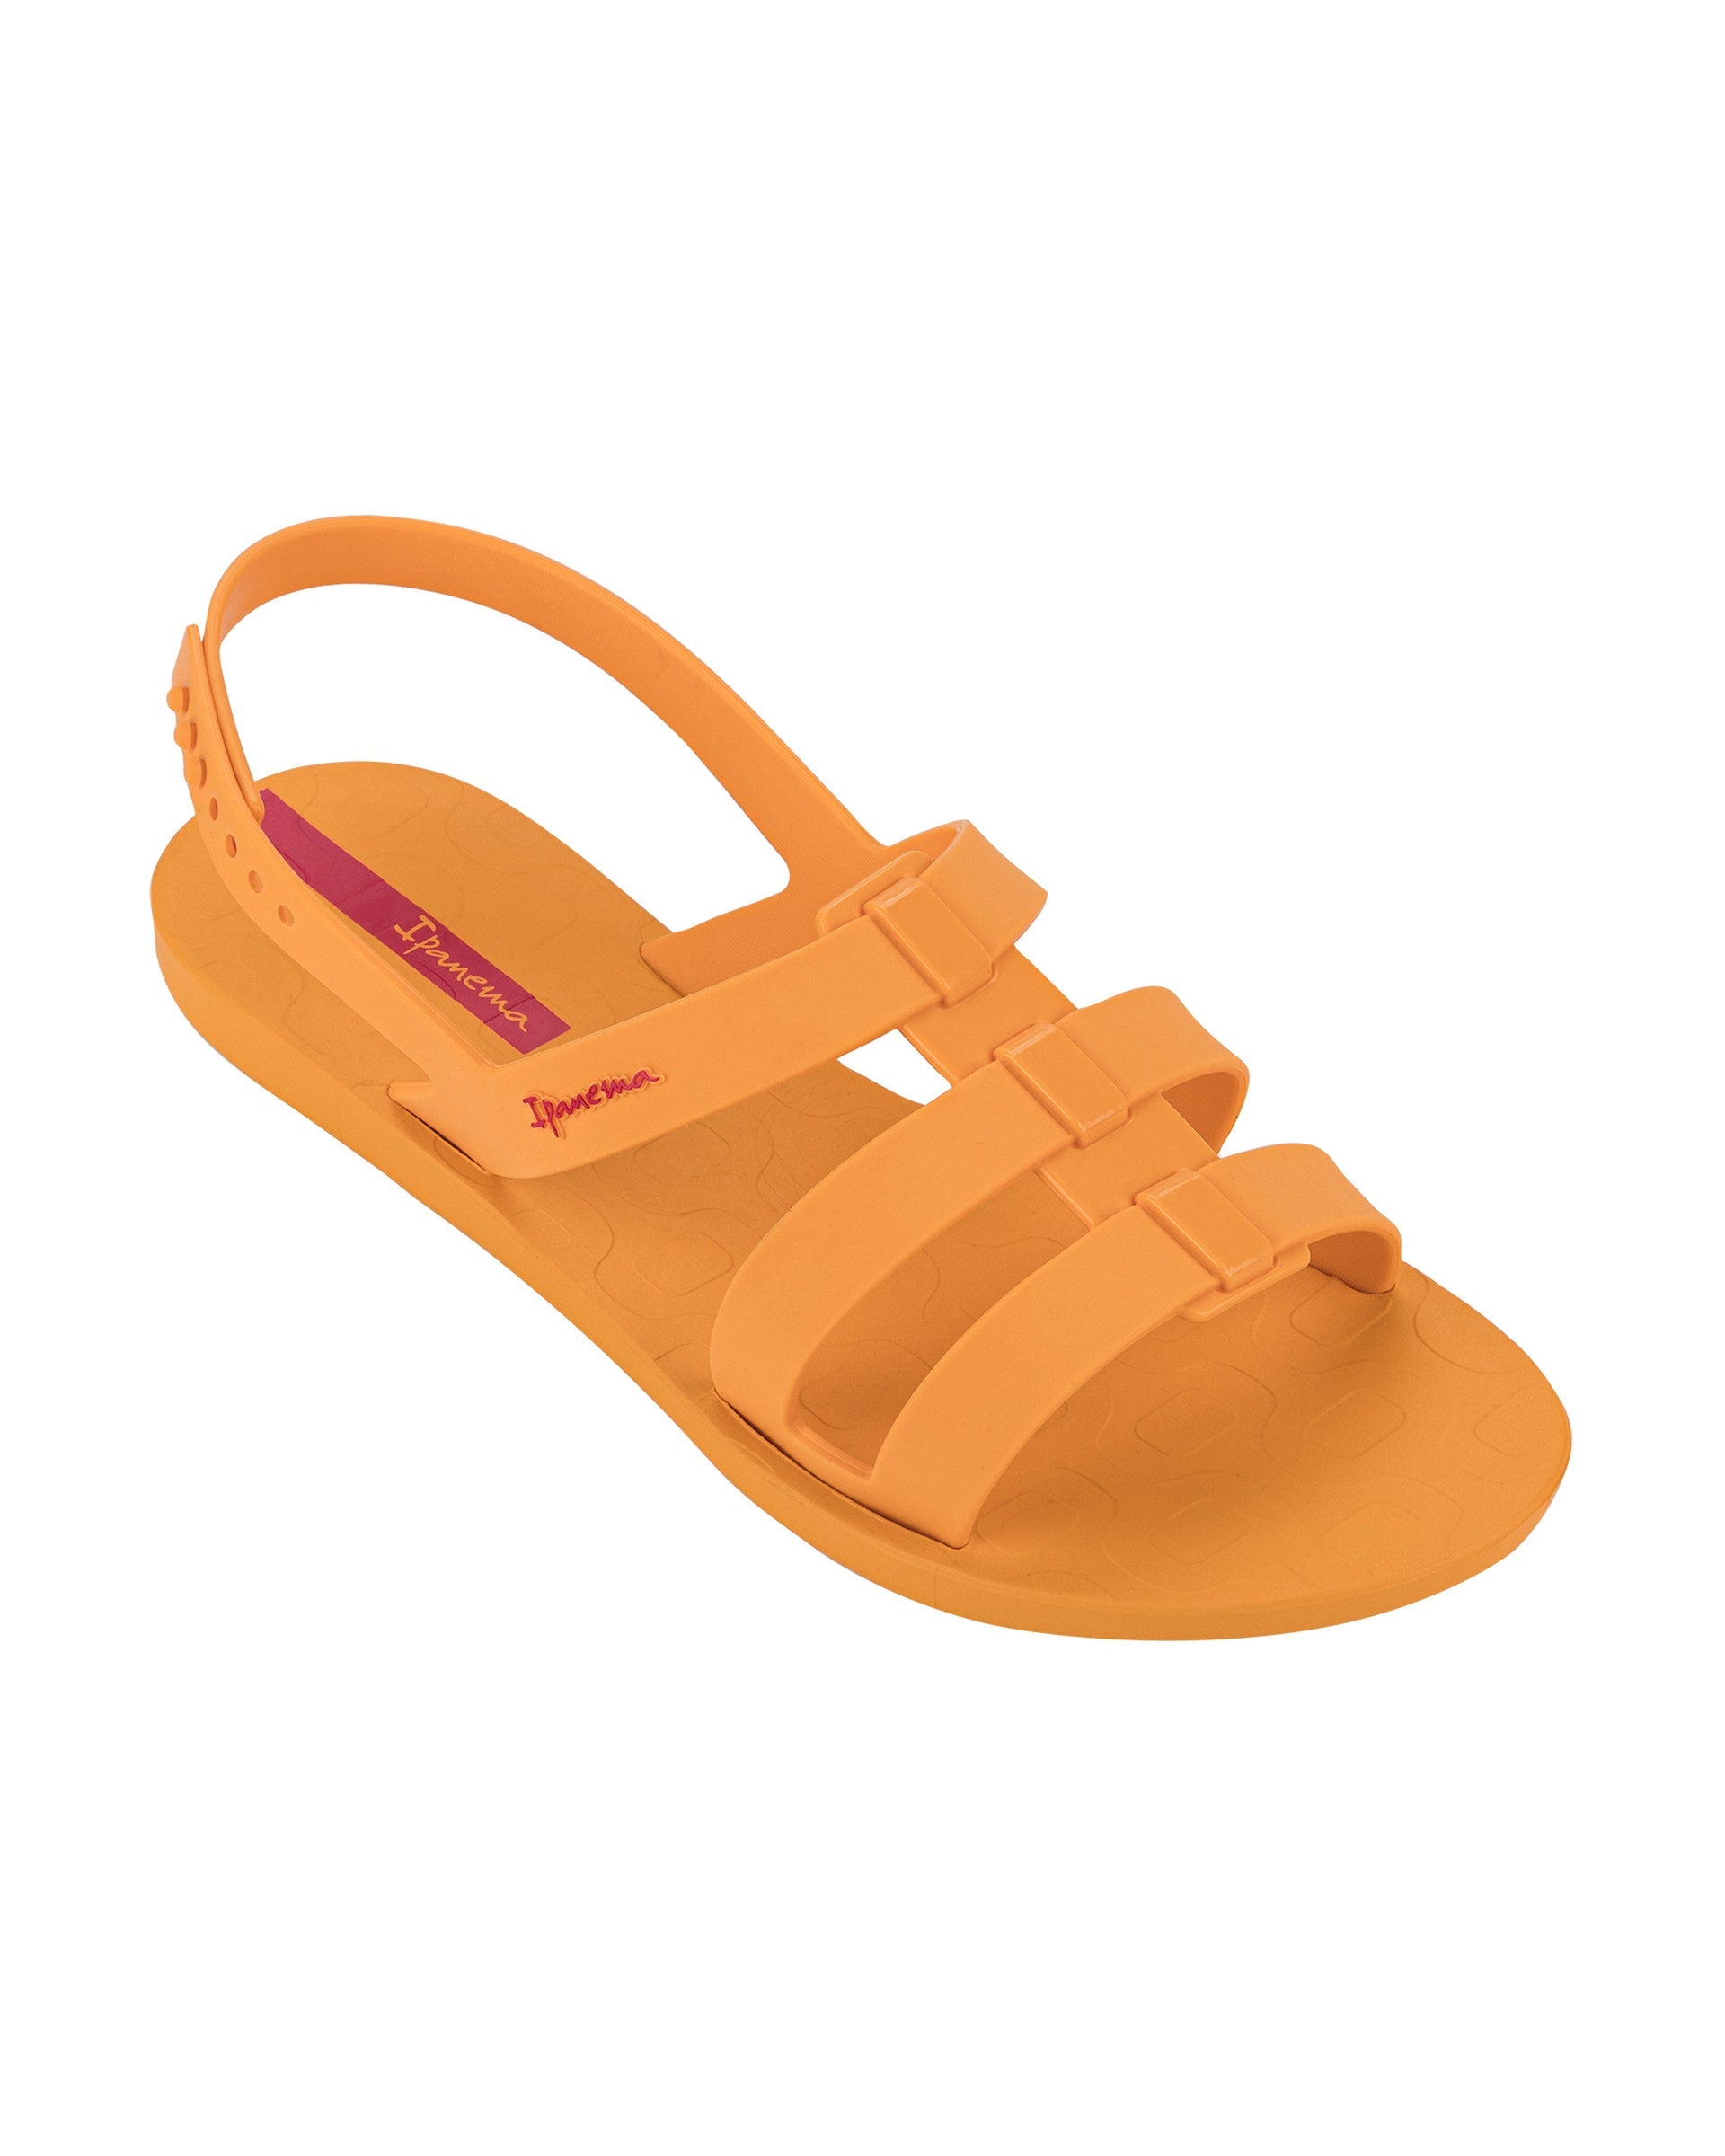 Angled view of a orange Ipanema Style women's sandal.